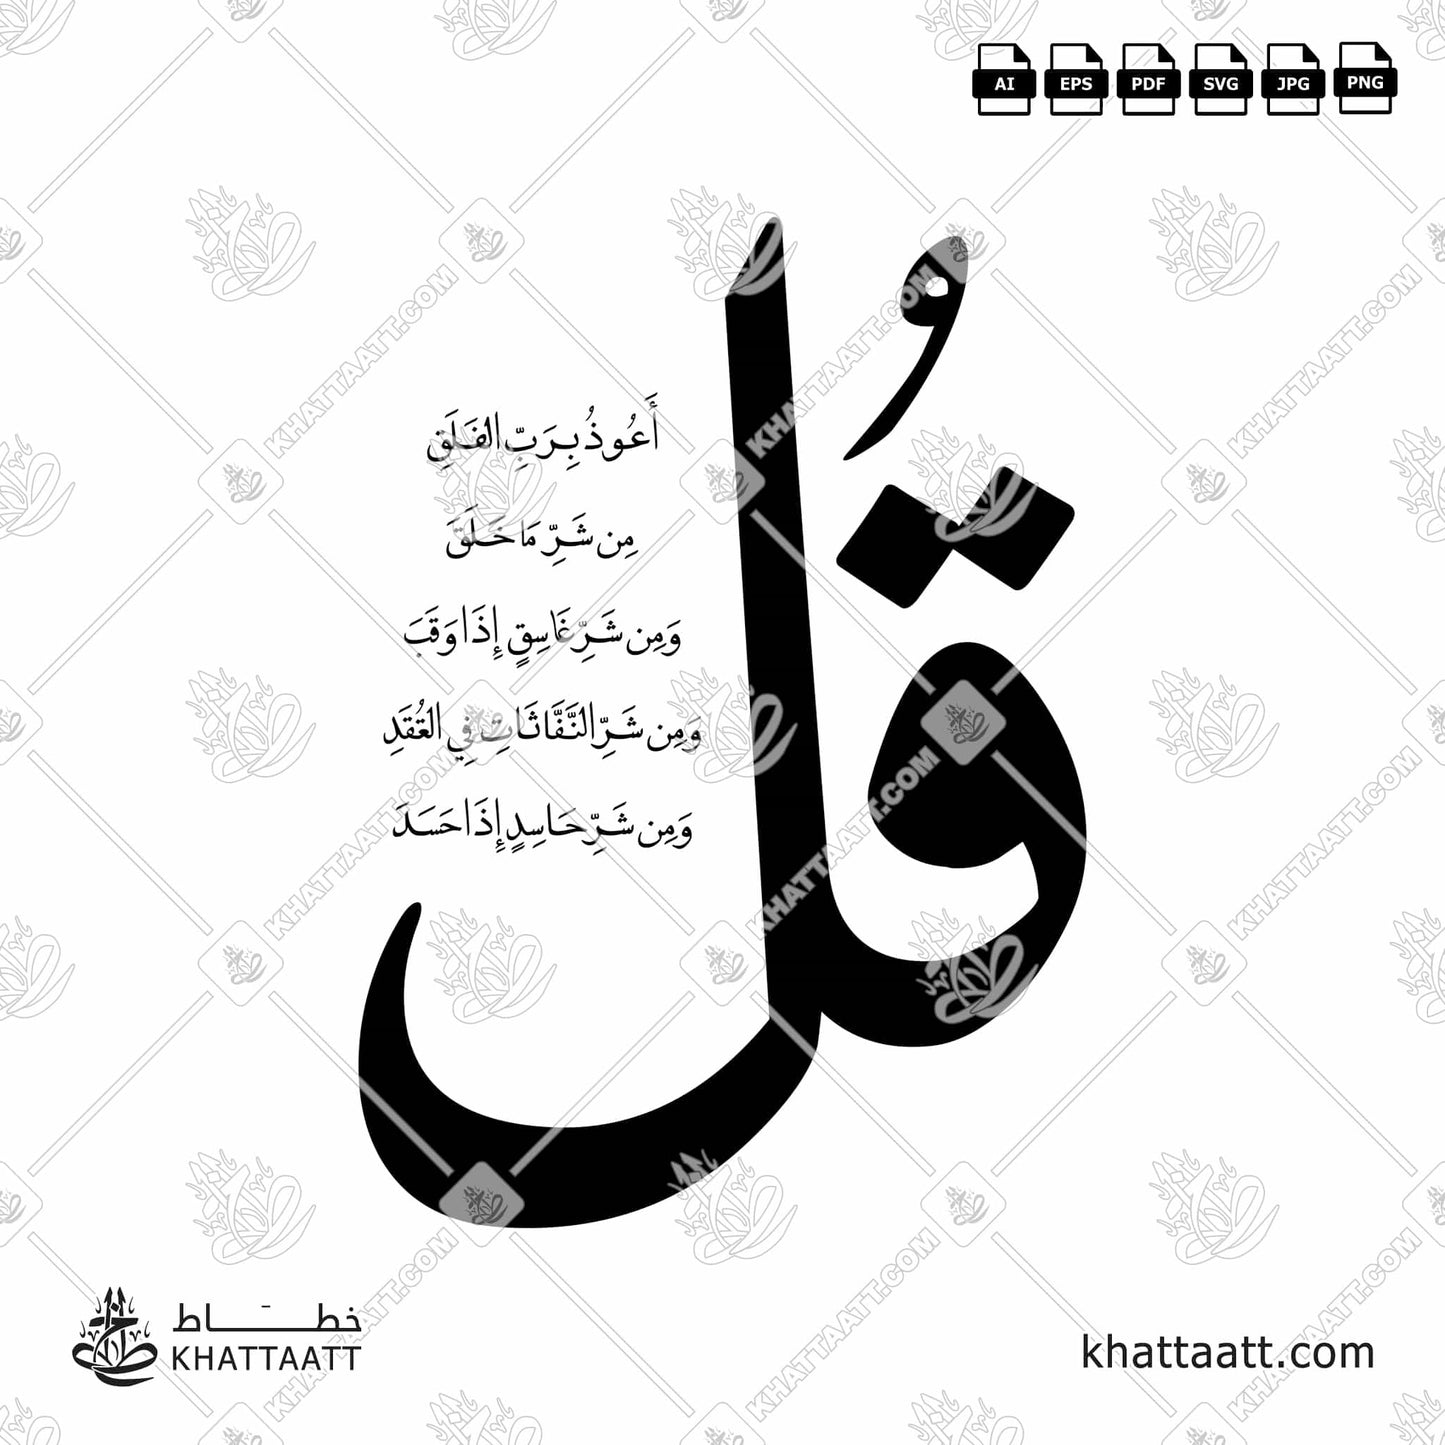 Arabic Calligraphy of Surat Al-Falaq سورة الفلق in Farsi Naskh Script خط النسخ الفارسي.